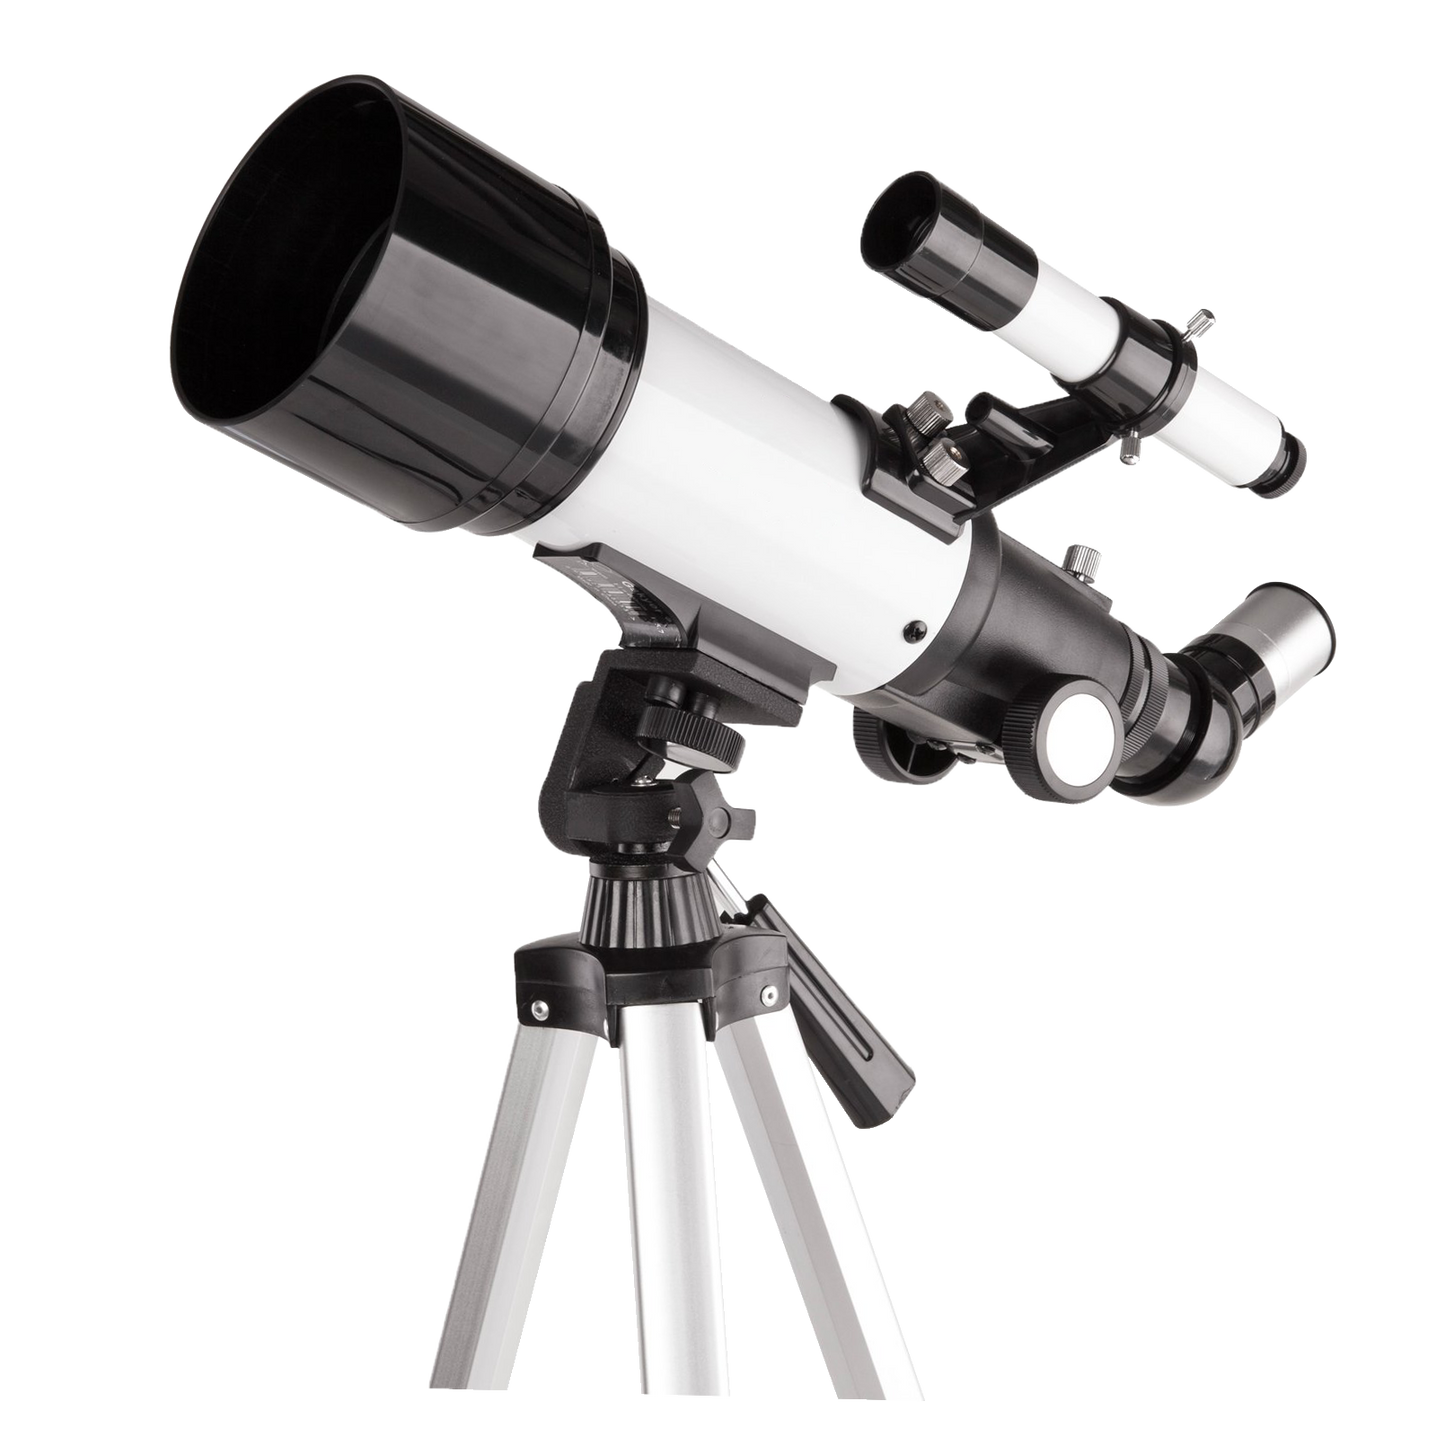 Tontube Telescope, 70mm Aperture 400mm AZ Mount Astronomical Refracting Telescope - Travel Telescope for Moon Watching